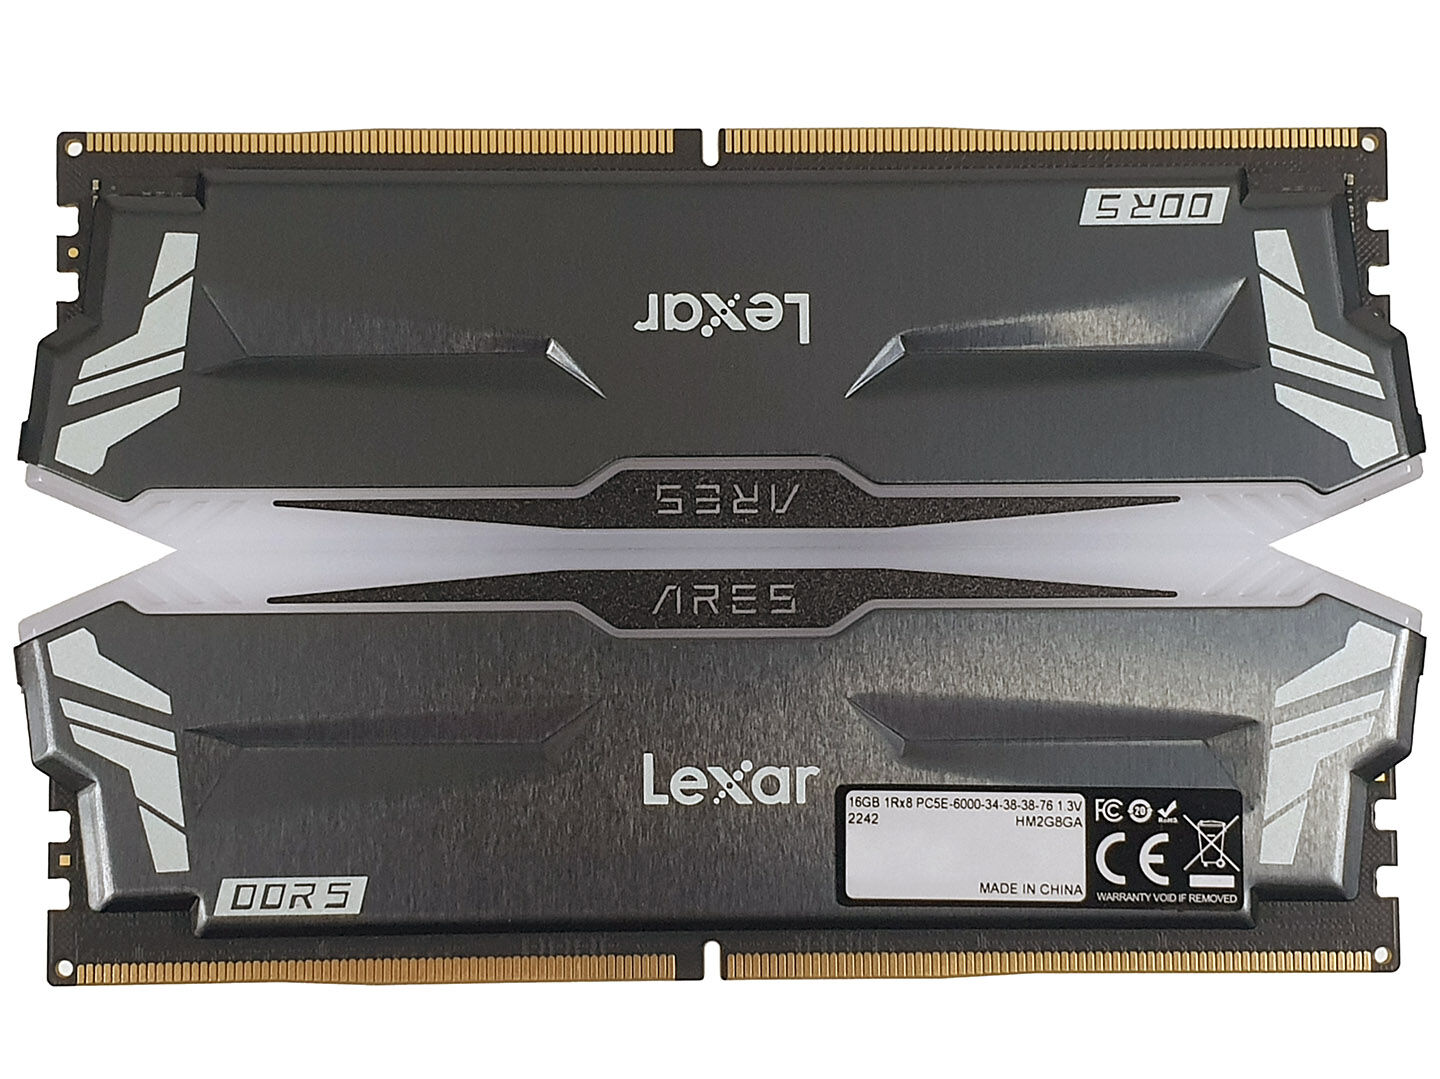 Lexar DDR4-2666 16GB Dual-Channel Memory Kit Review